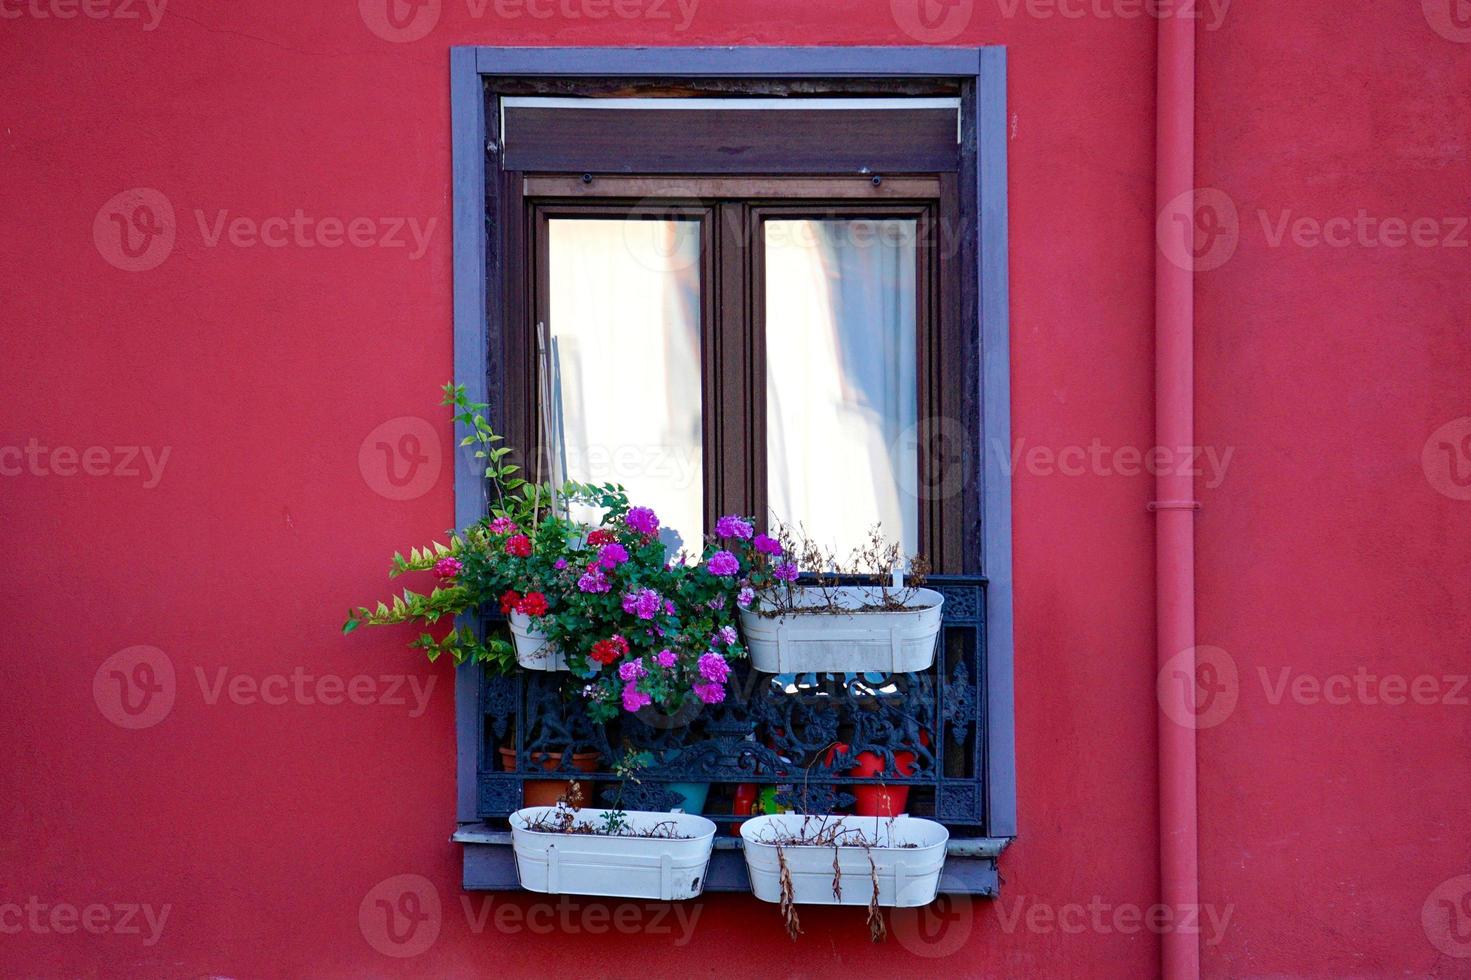 janela na fachada vermelha da casa foto